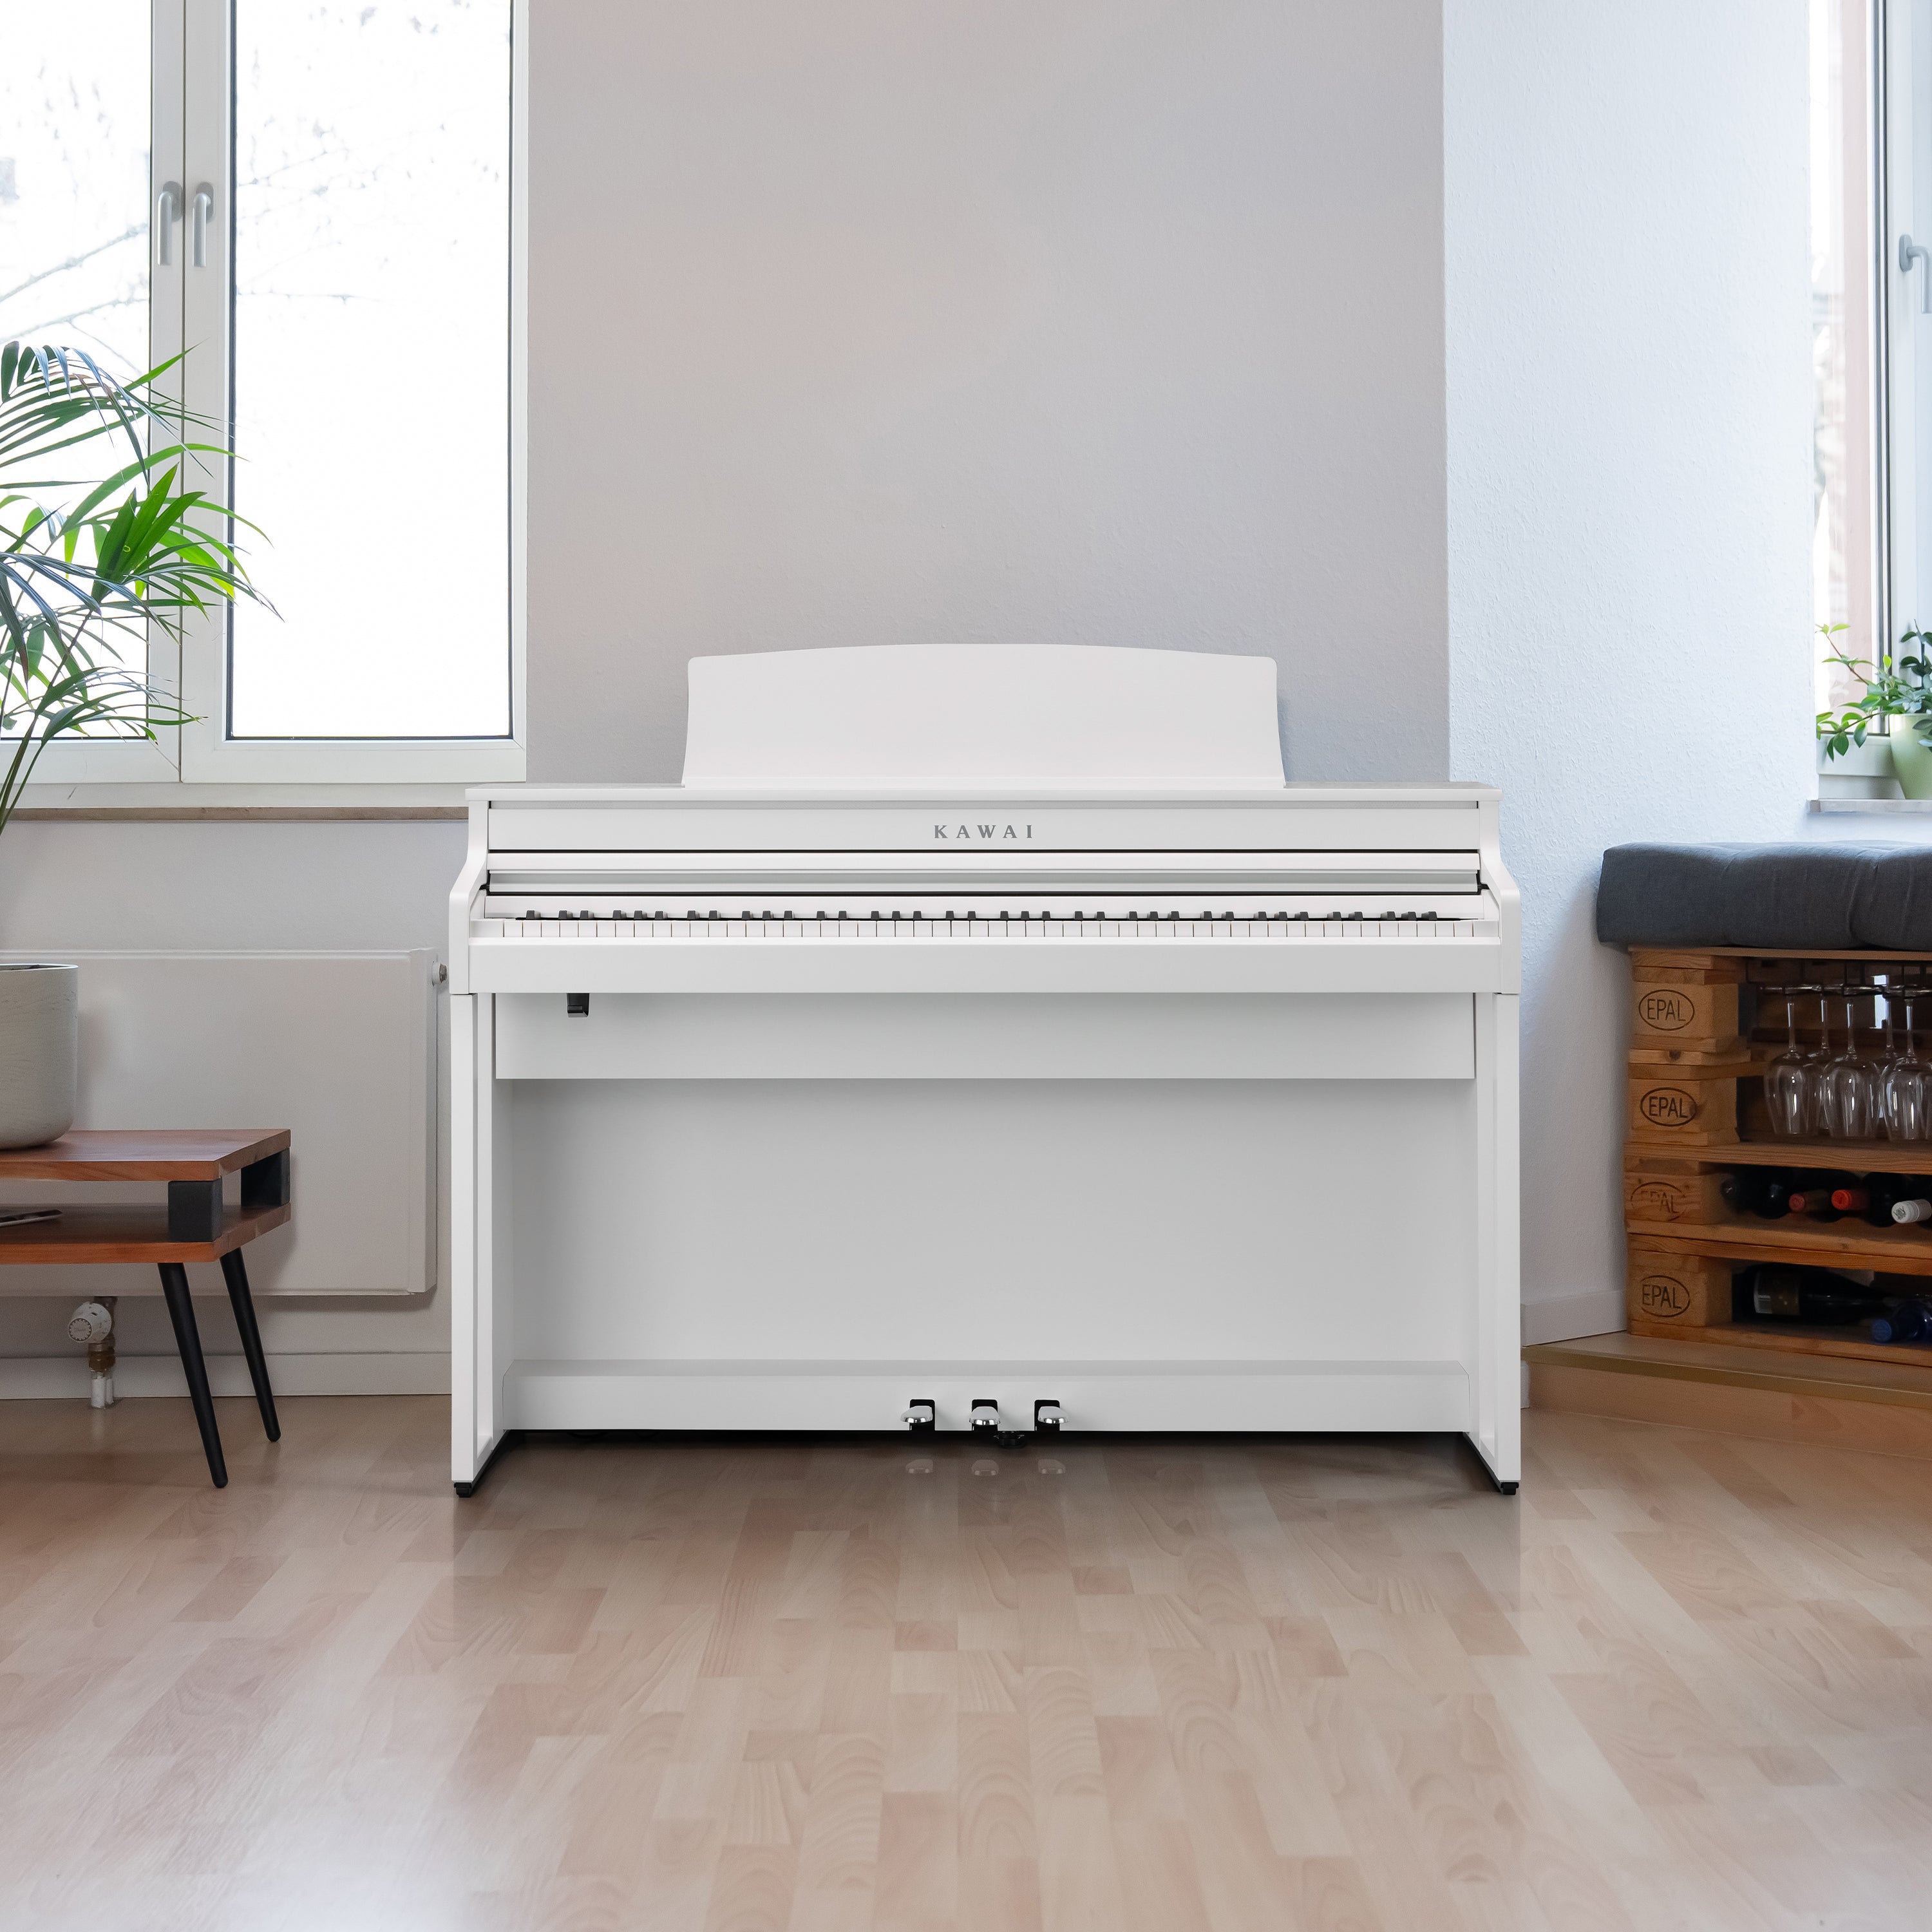 Kawai CA401 Concert Artist Digital Piano - Satin White - in a stylish living room